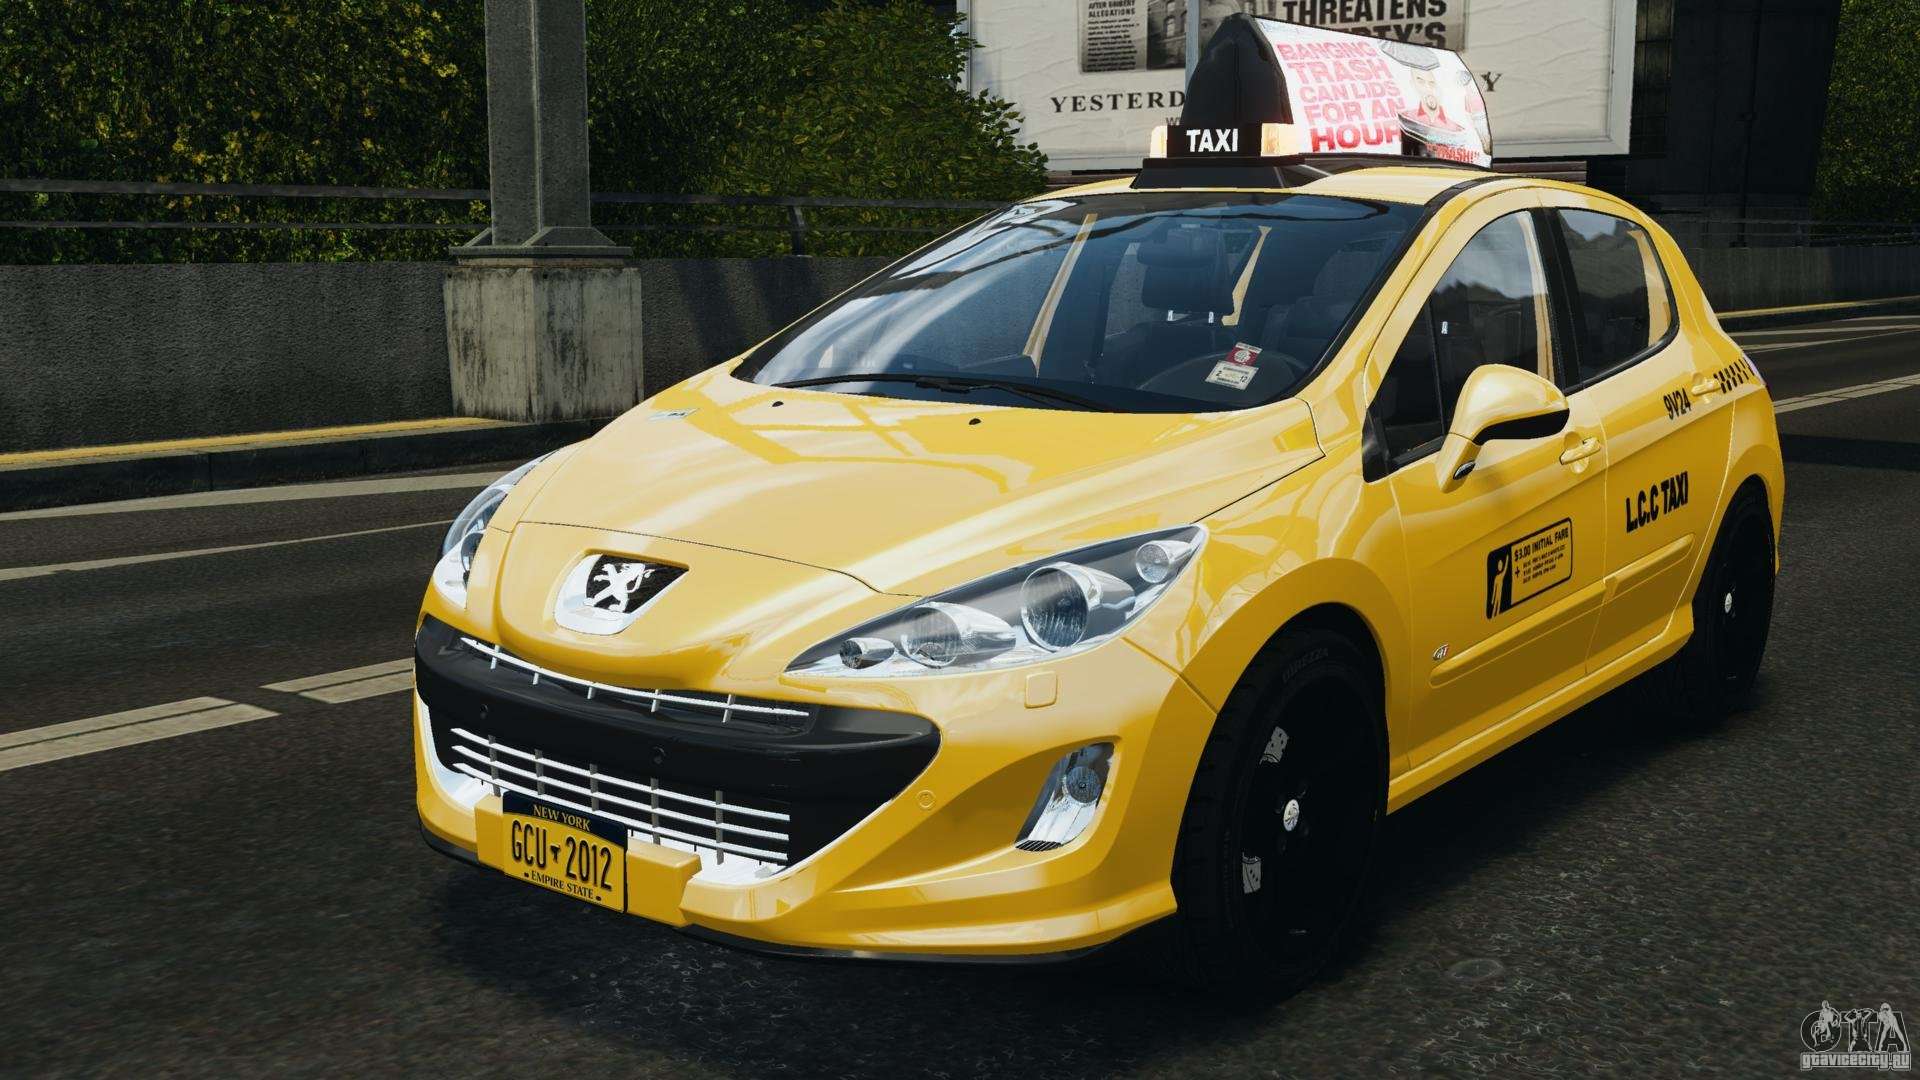 Peugeot 407 taxi для gta 5 фото 45